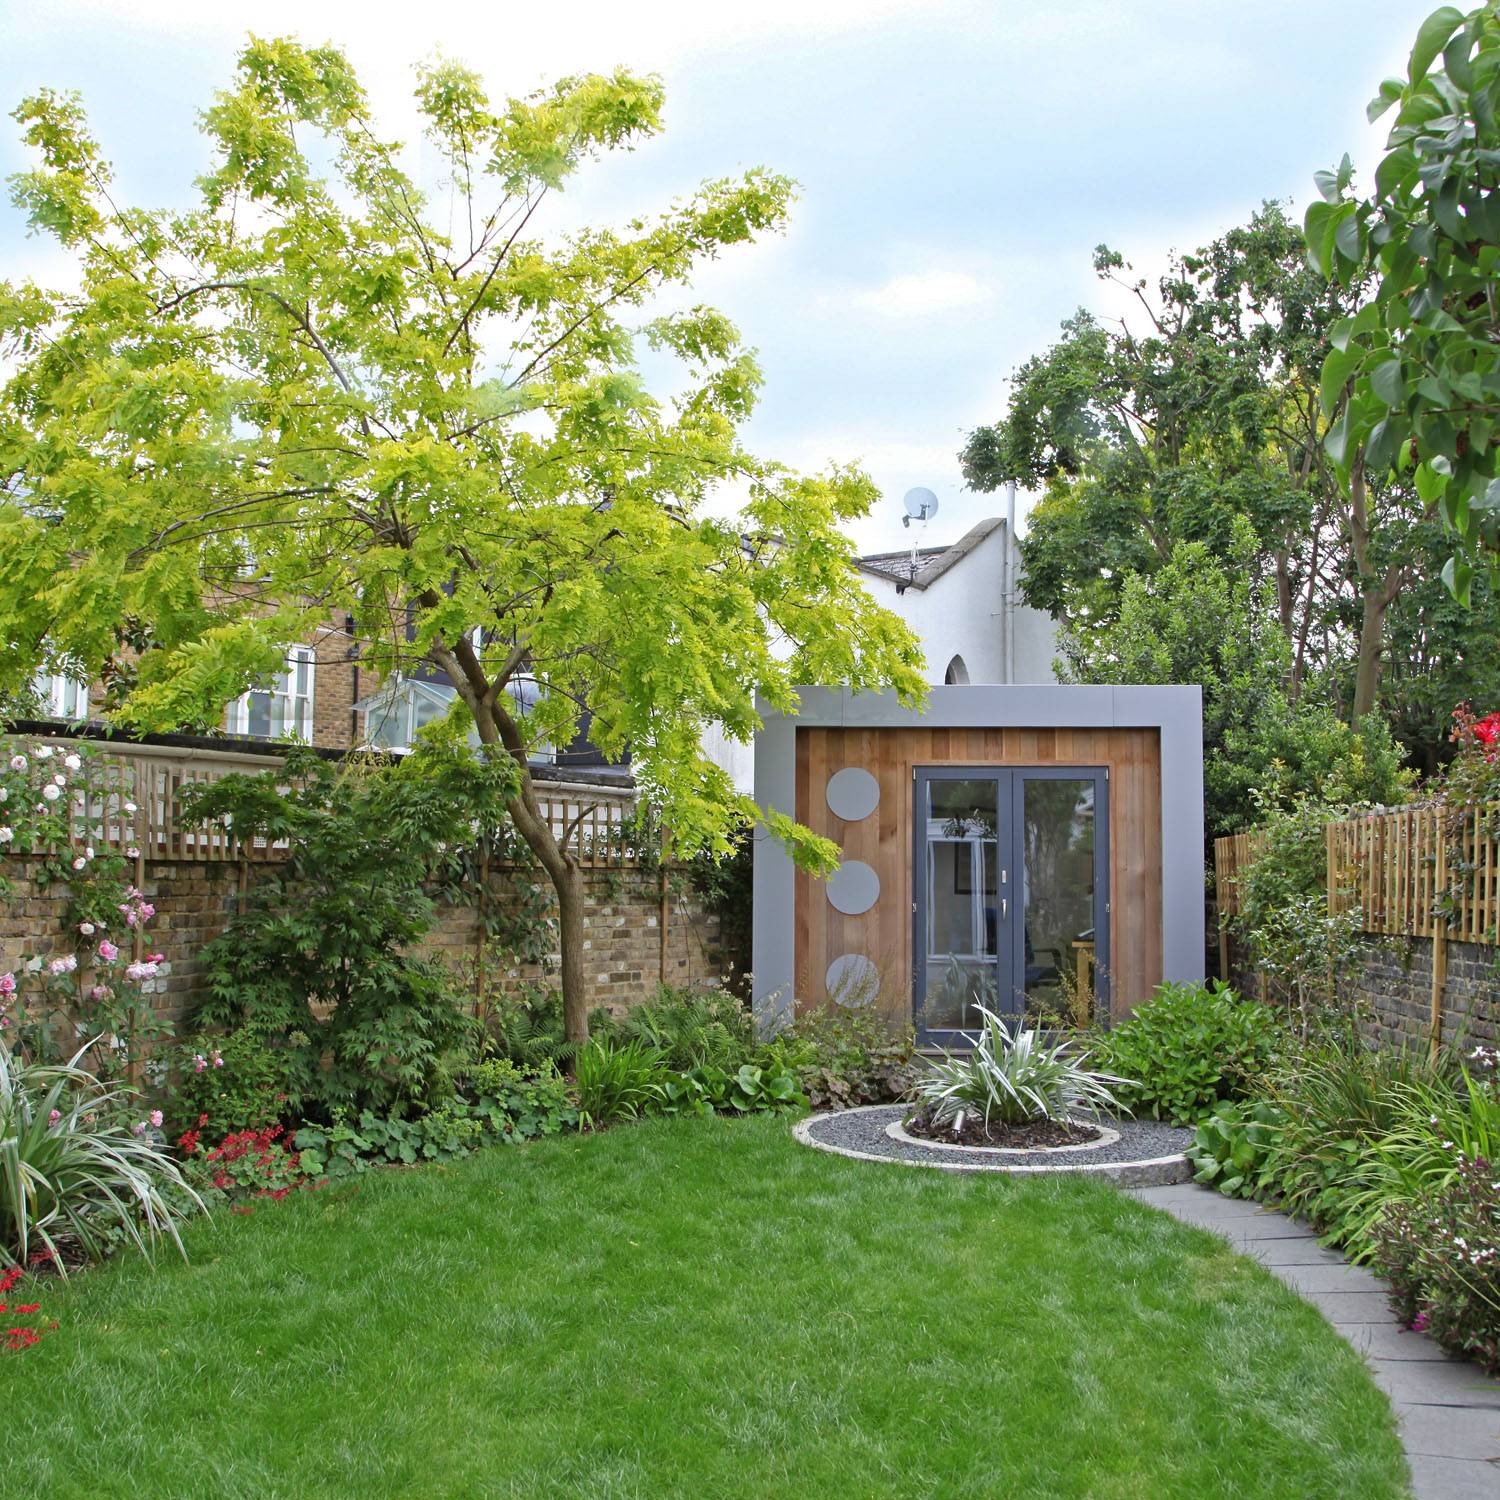 Rosemary Coldstream Garden Design